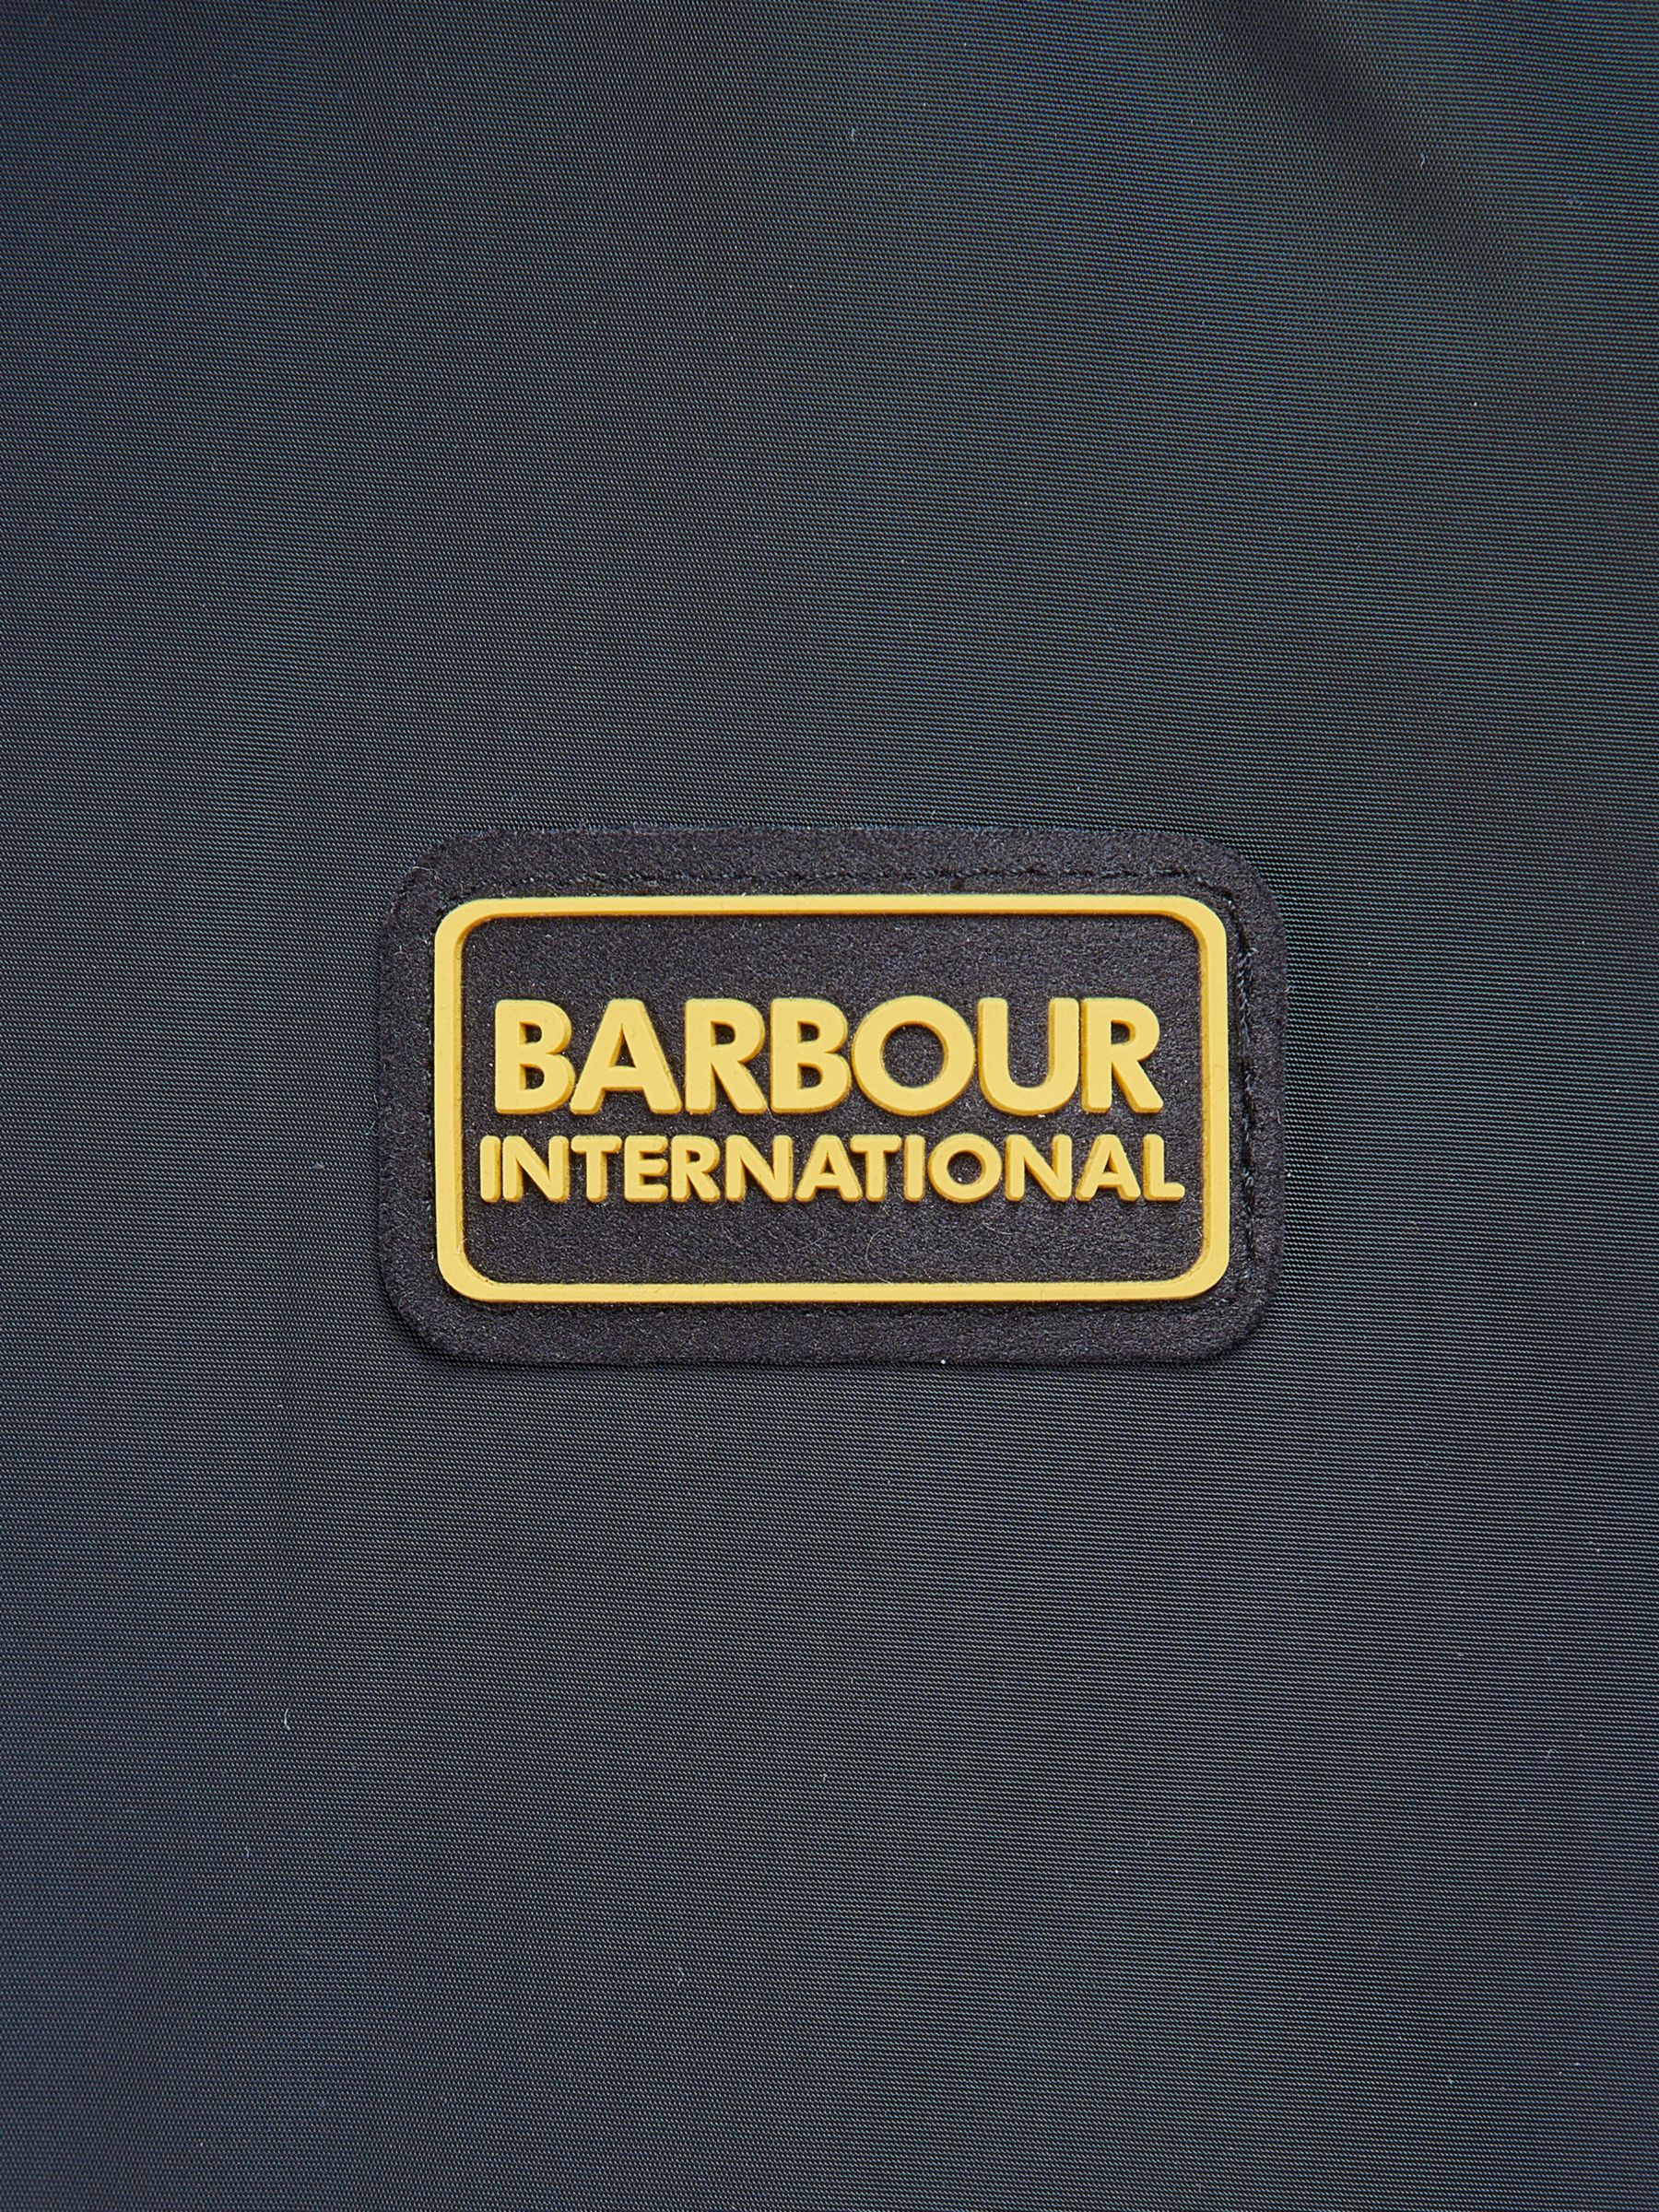 barbour international bowden jacket